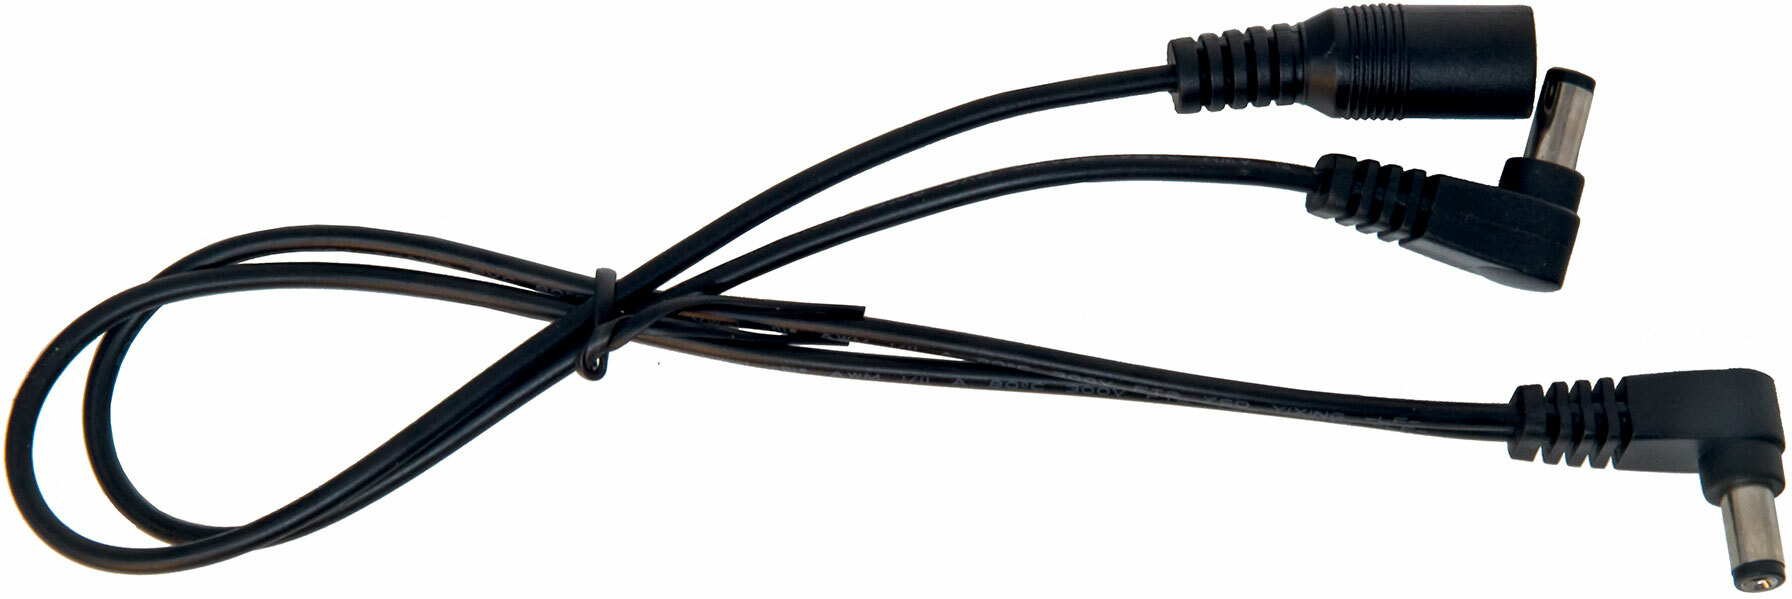 X-tone 2-way Chain Cable Alimentation Pedales - Adaptateur Connectique - Main picture